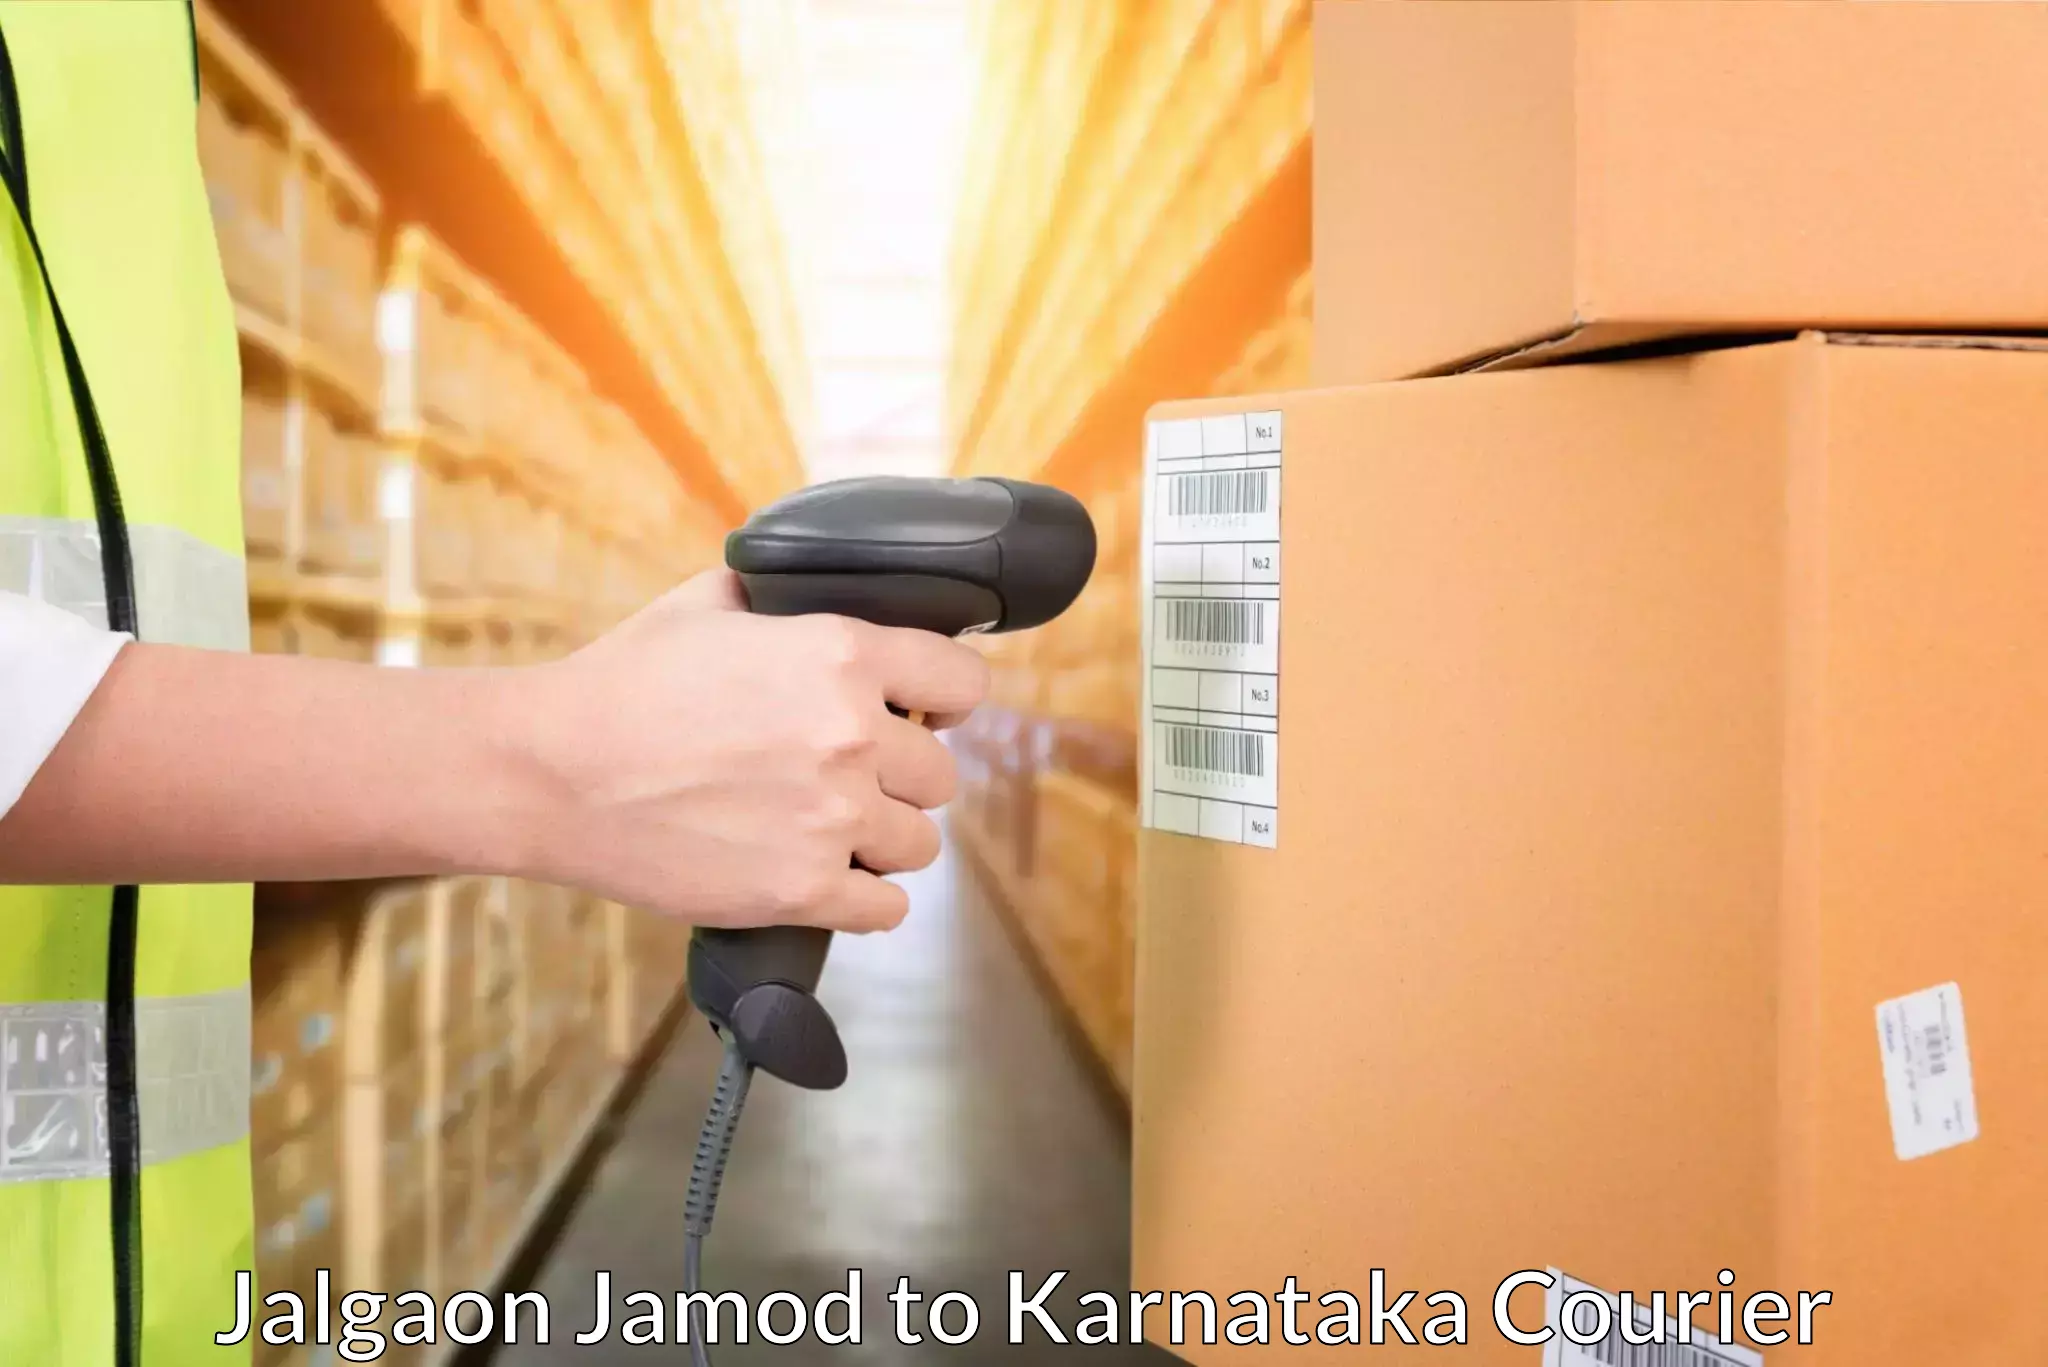 Speedy delivery service Jalgaon Jamod to Uttara Kannada